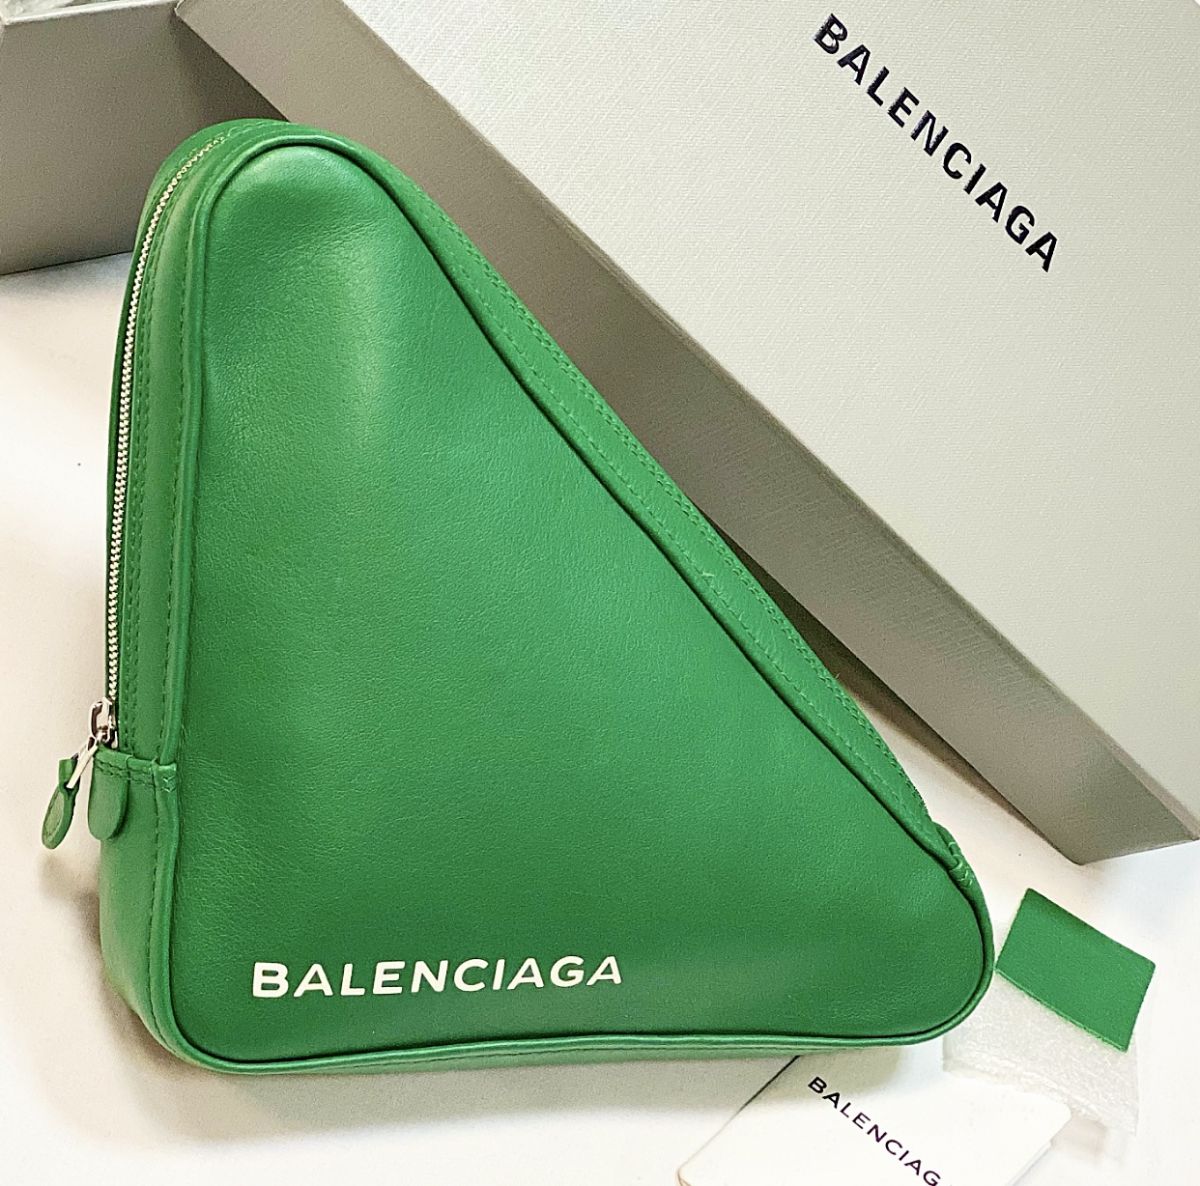 Сумка Balenciaga размер 20 цена 38 463 руб / карточка / 